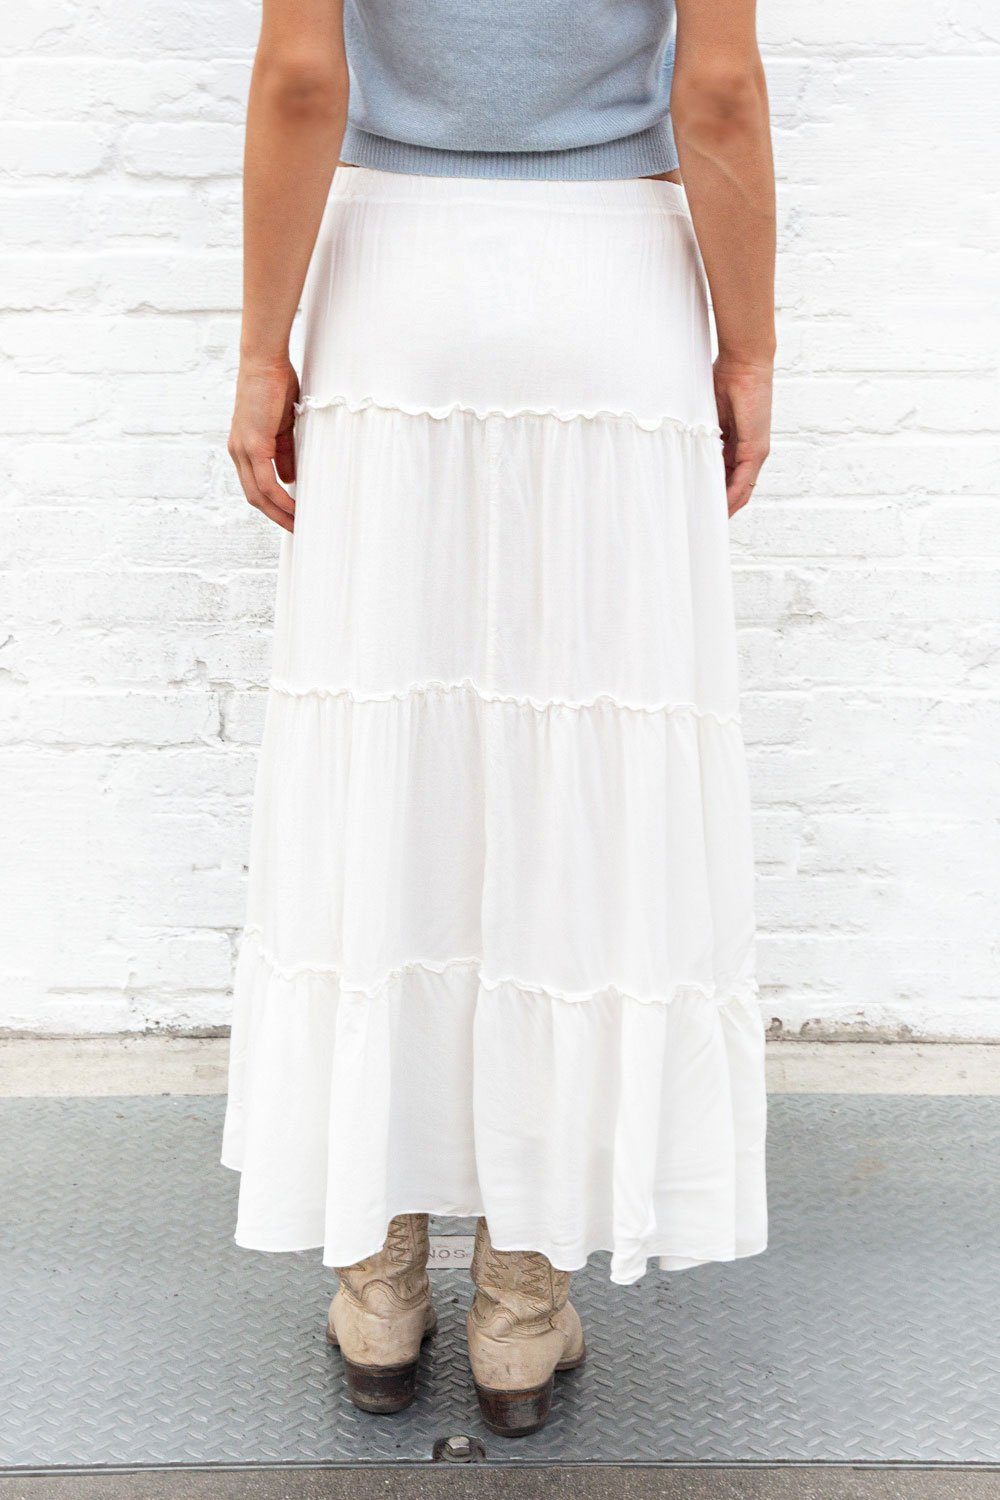 Brianna - White skirt, black top @iMGSRC.RU